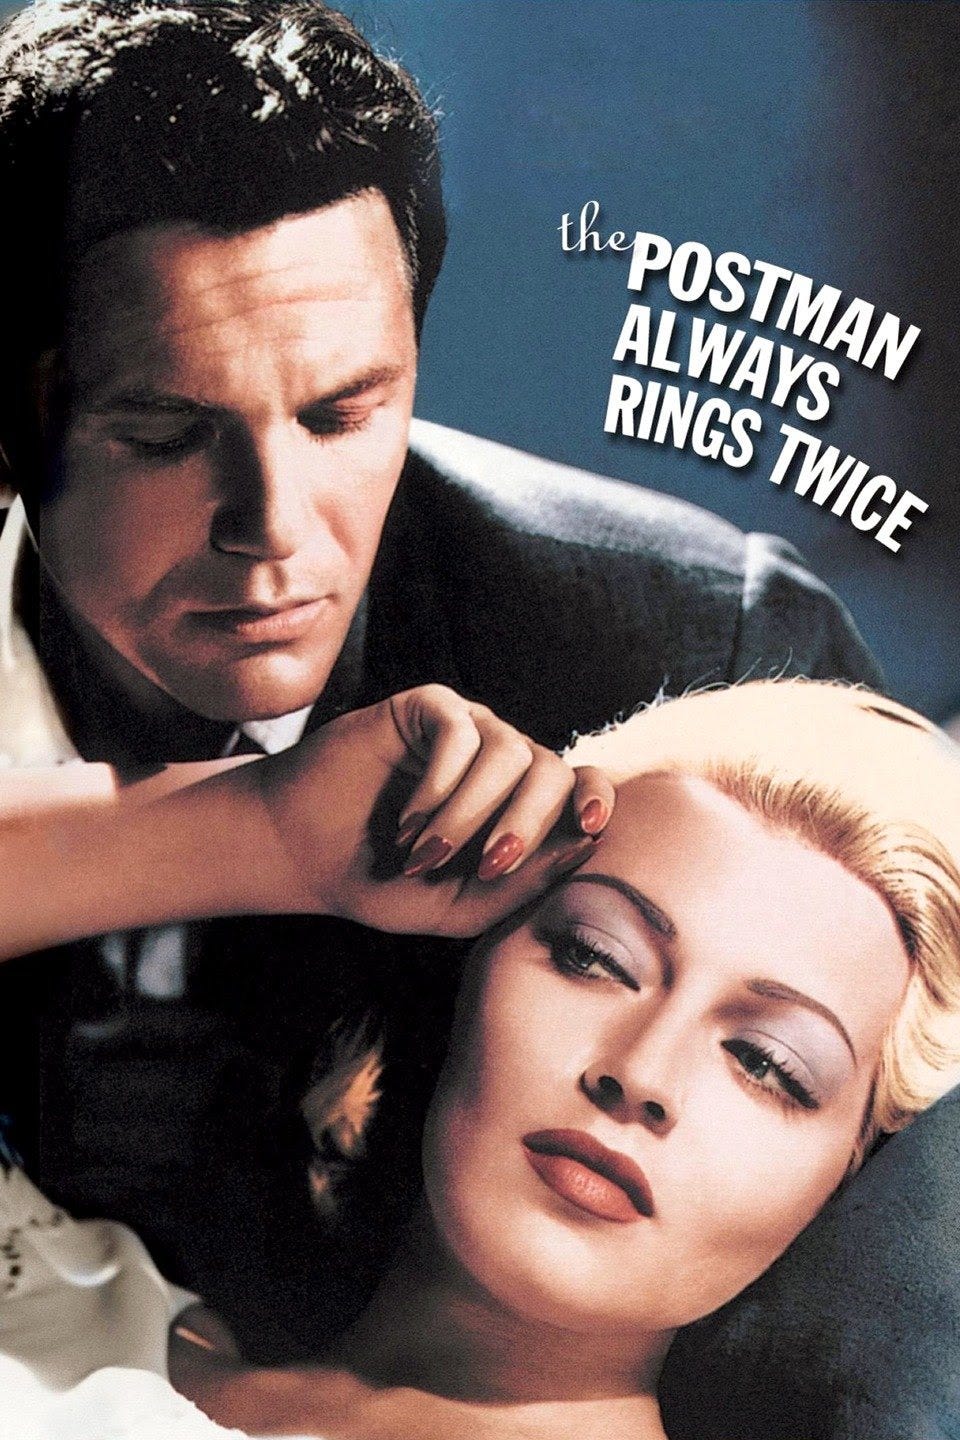 Poster by Warner Brothers. https://www.warnerbros.com/movies/postman-always-rings-twice-1946